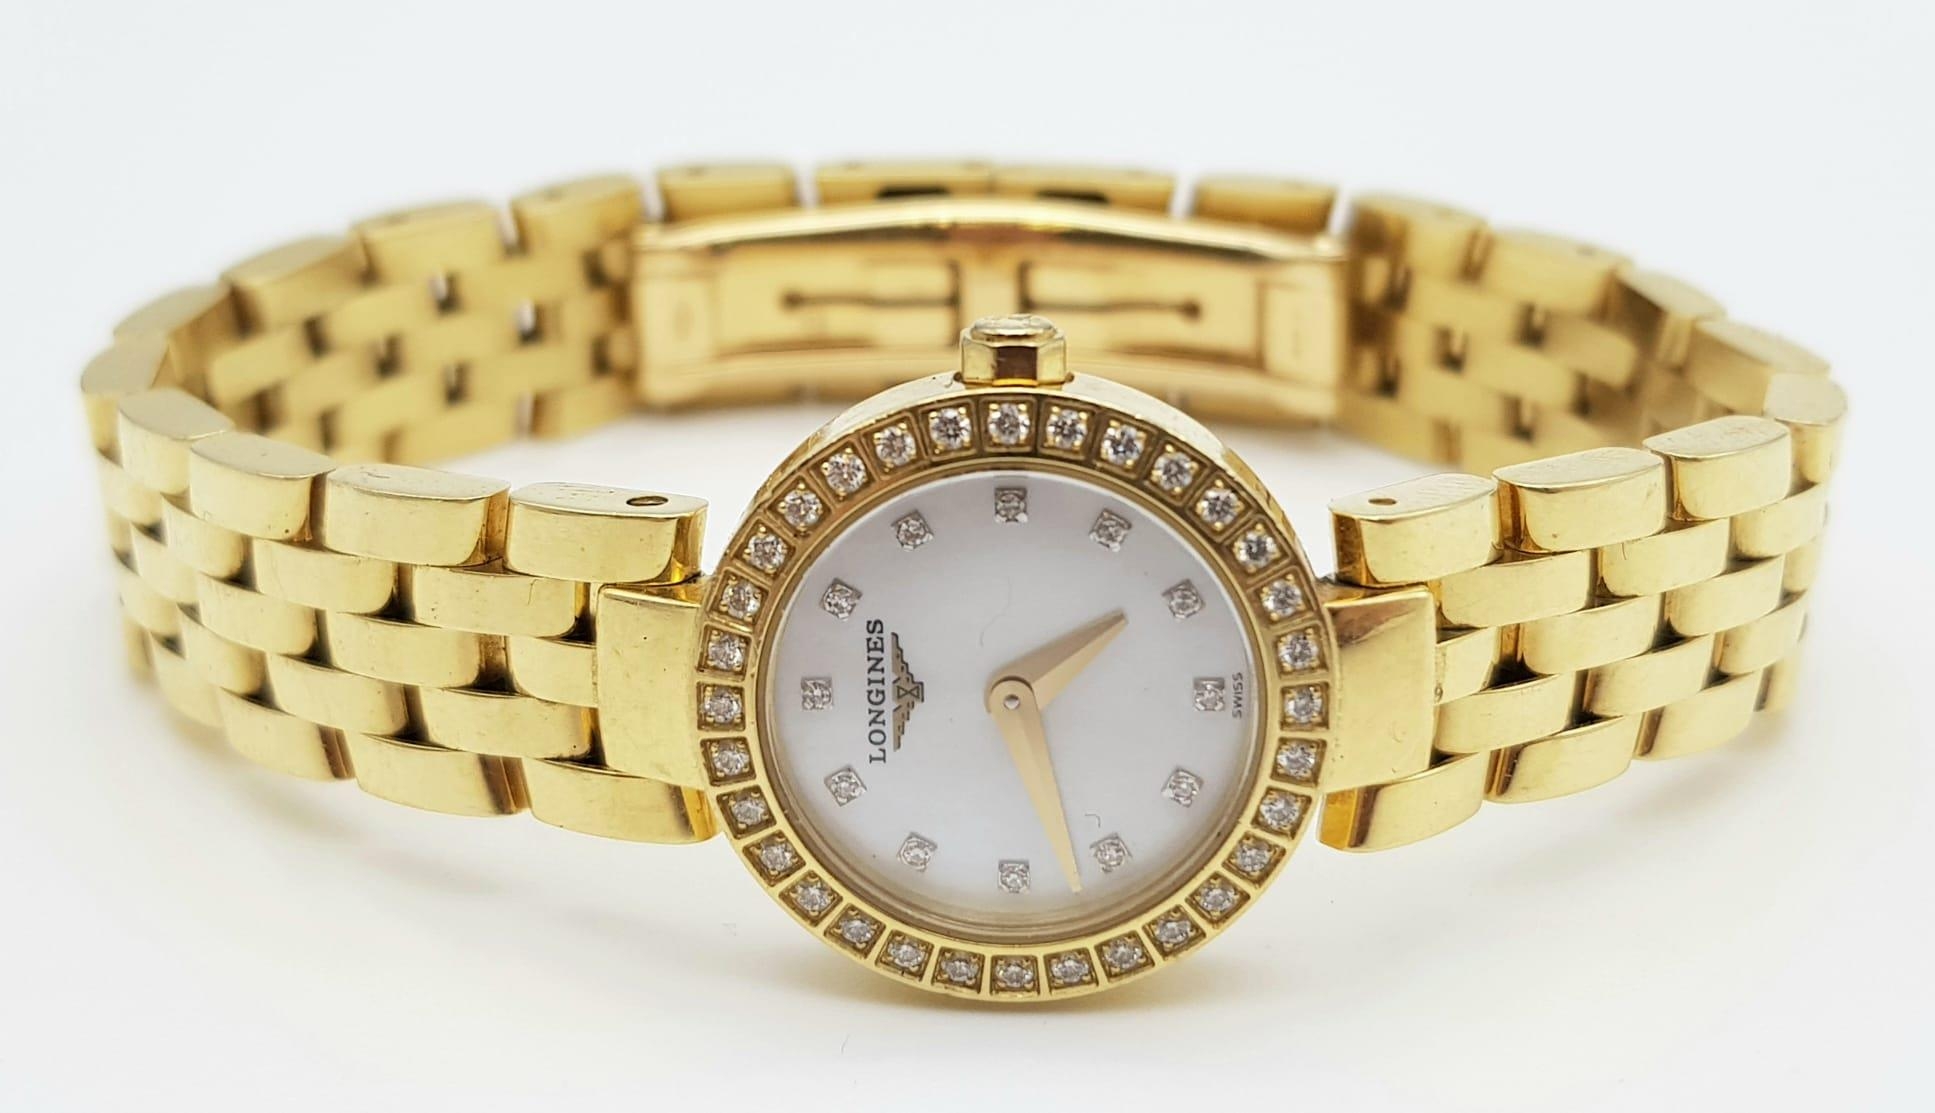 Longine ladies watch 18k diamond watch in original box and certificate. 54.3 grams. 19mm.